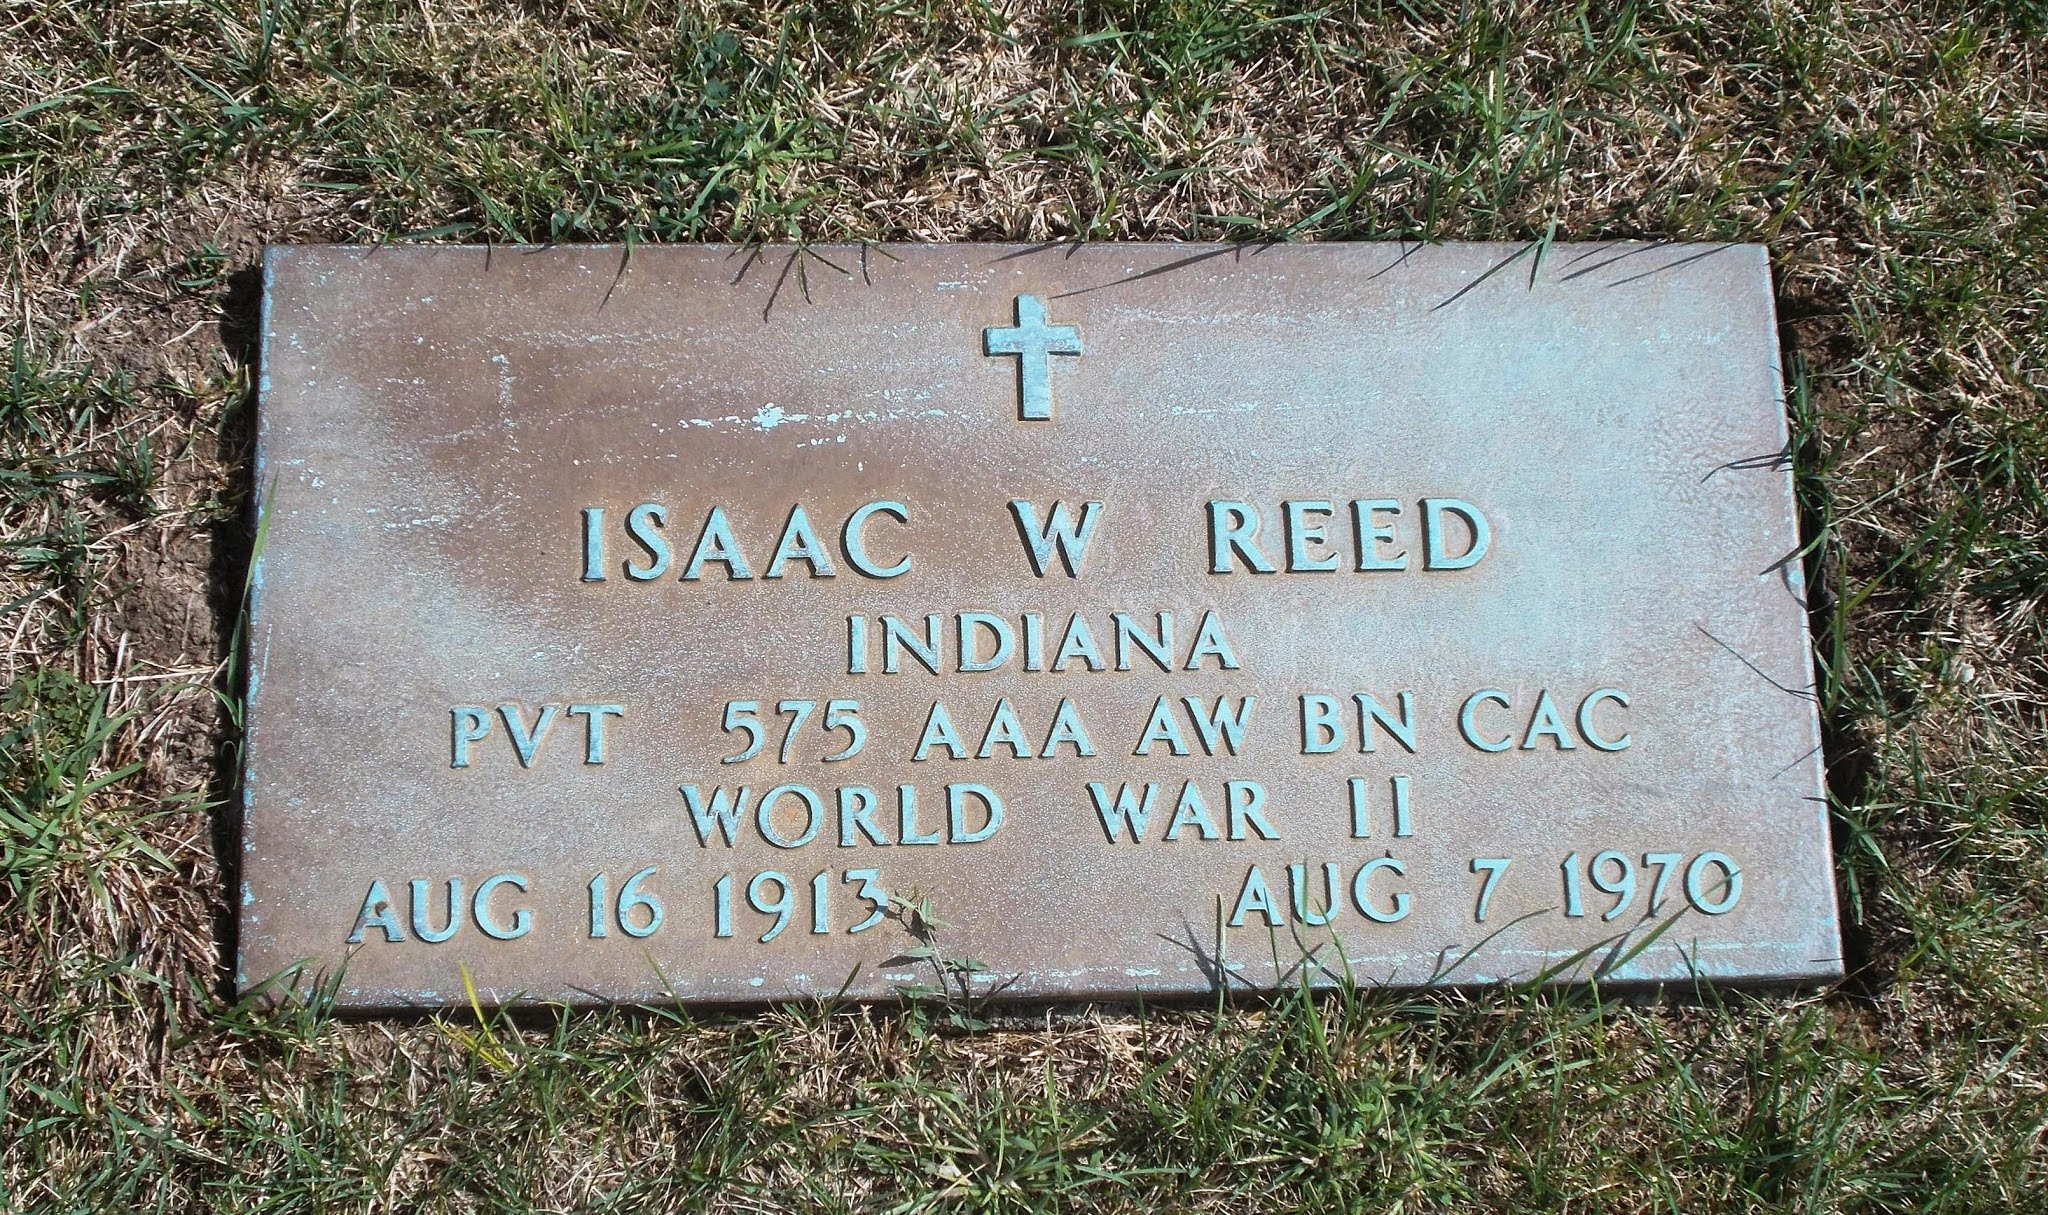 Isaac W Reed